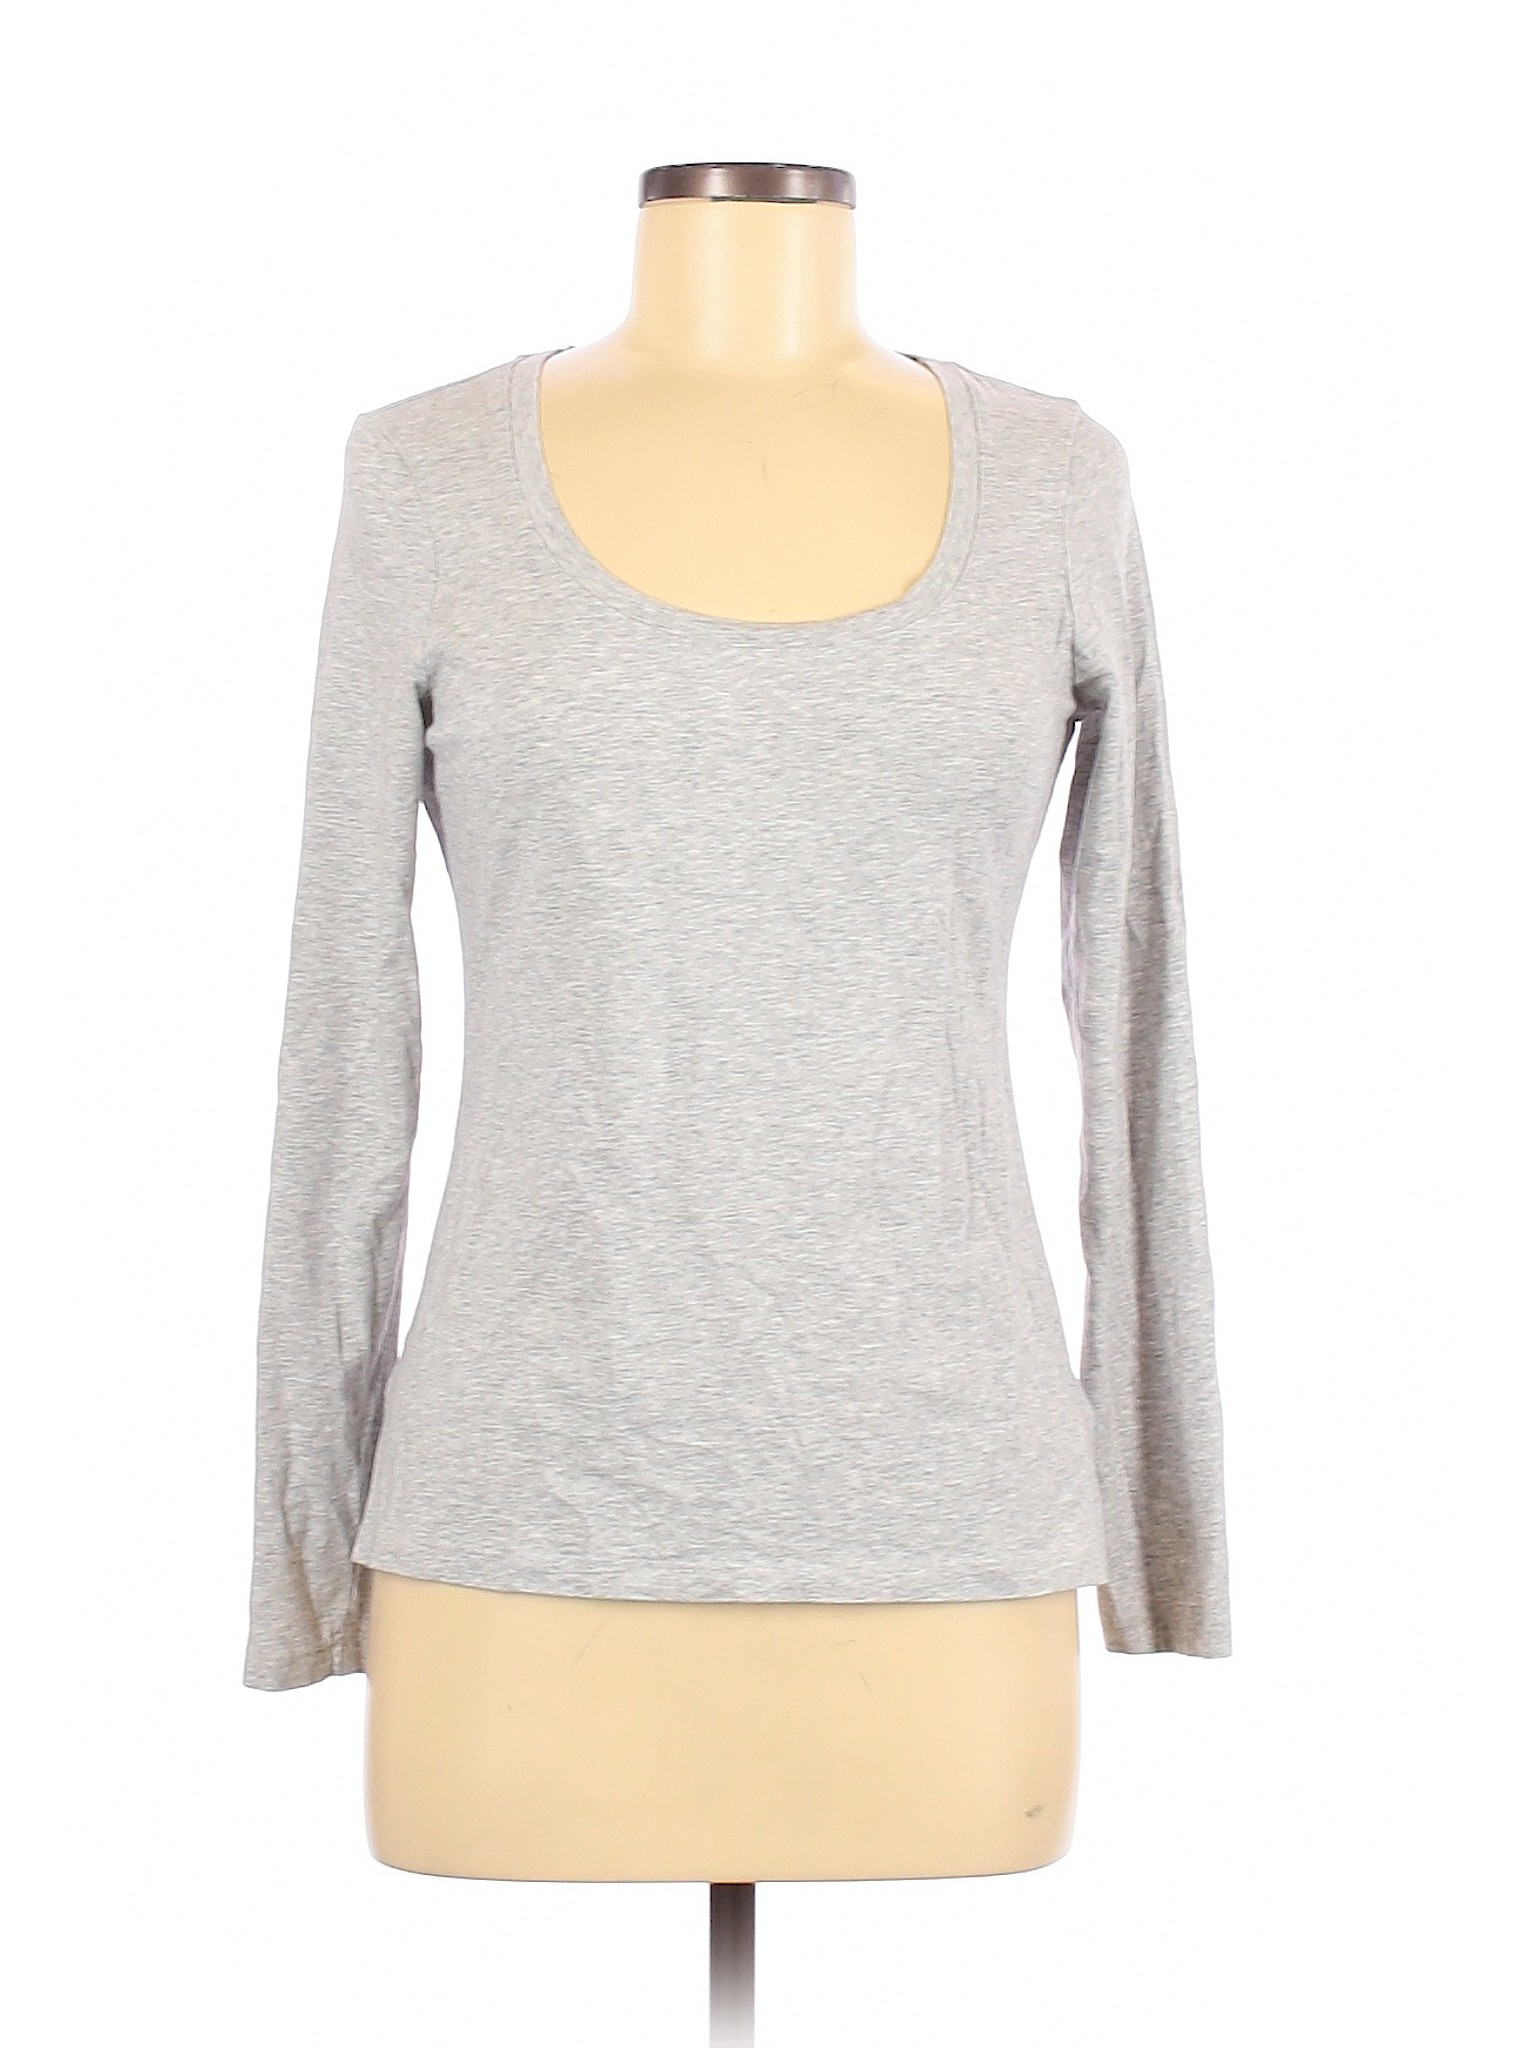 H&M Women Gray Long Sleeve T-Shirt L | eBay